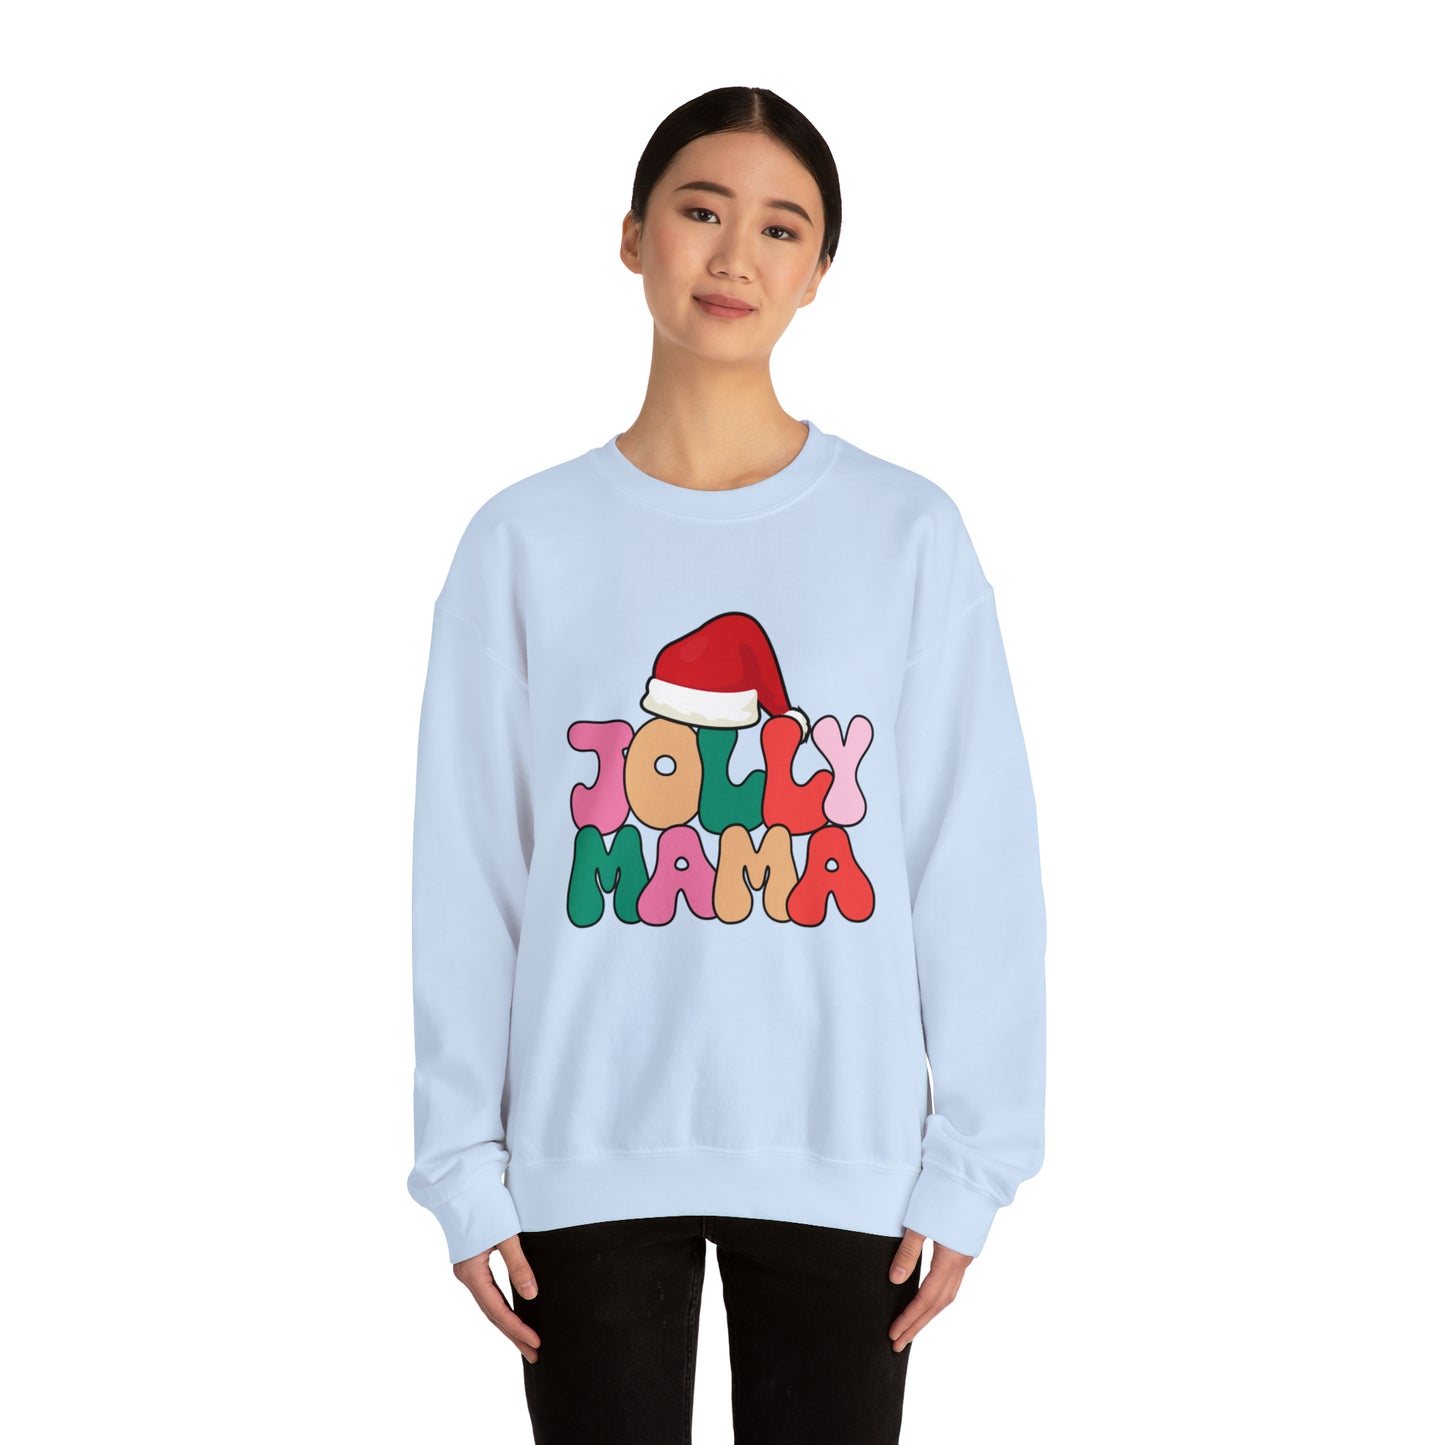 Holly Jolly Mama Women's Christmas Crewneck Sweatshirt